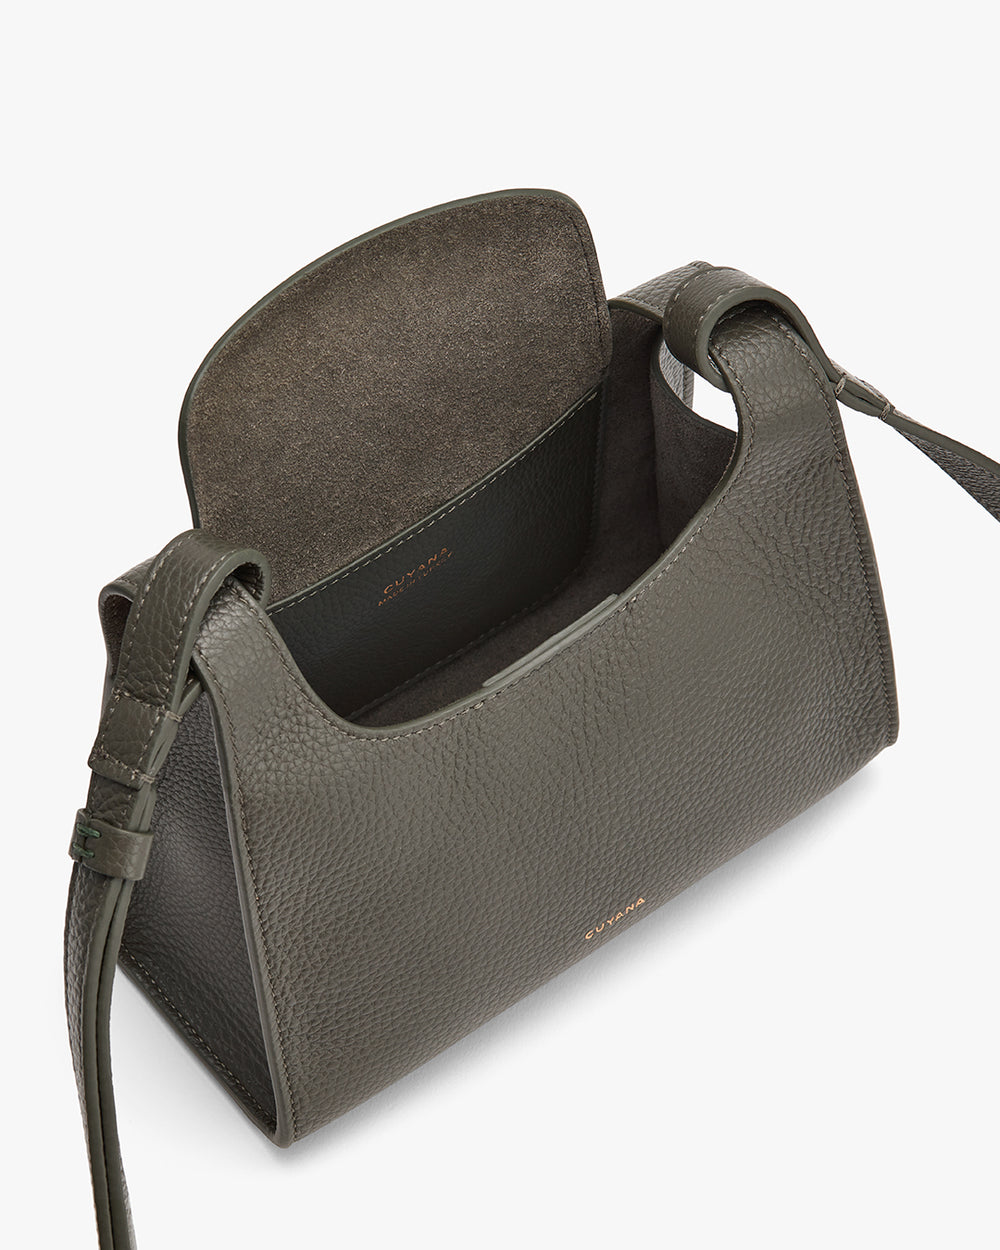 Open handbag with a shoulder strap.